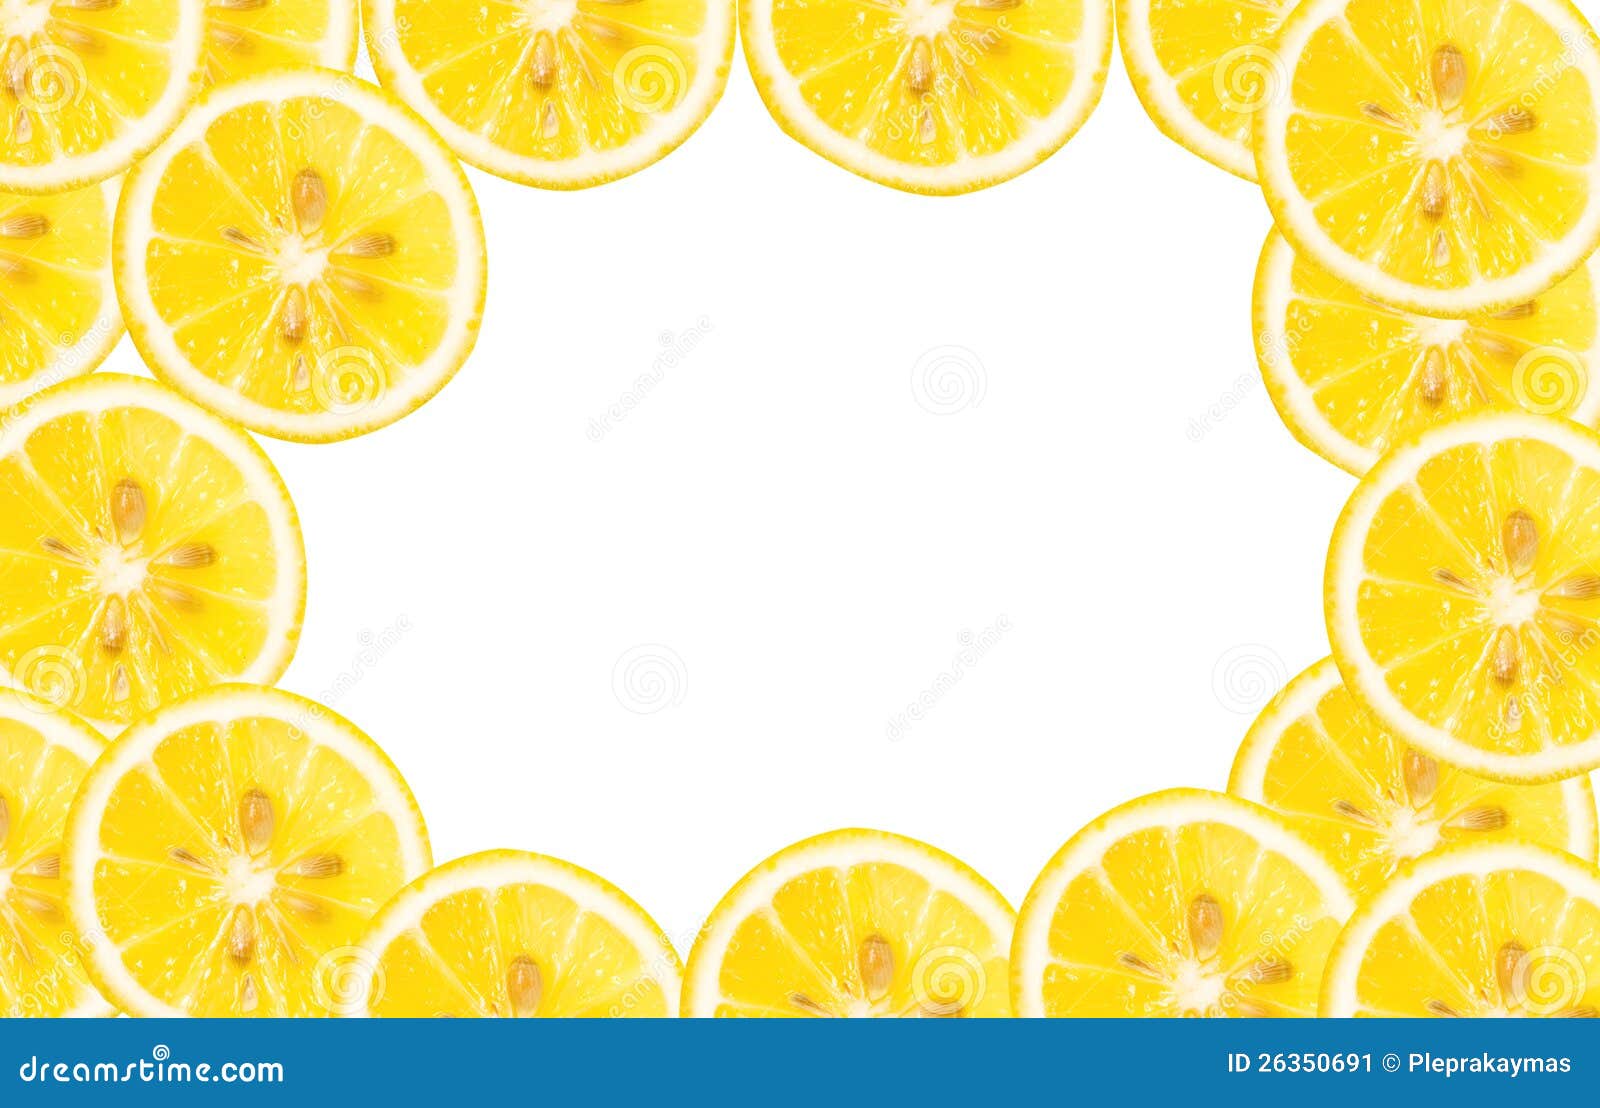 cross tumblr backgrounds Image Image Fresh Lemon  Pattern,background  Slices Stock